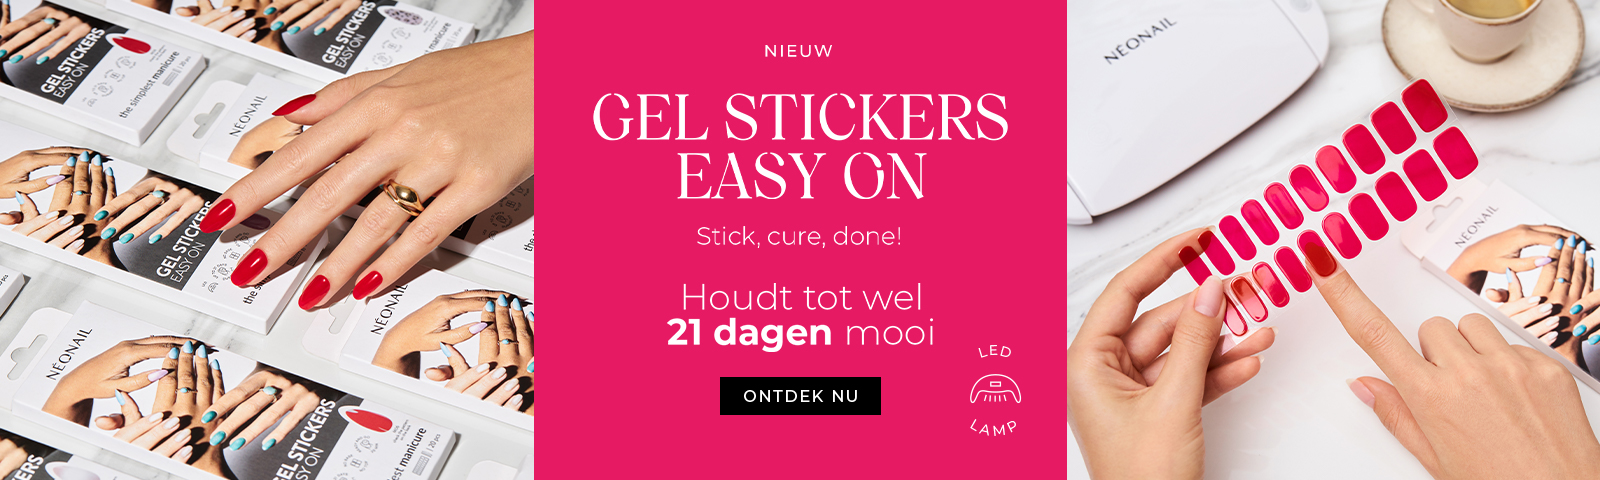 Easy on Gel stickers 30.11 